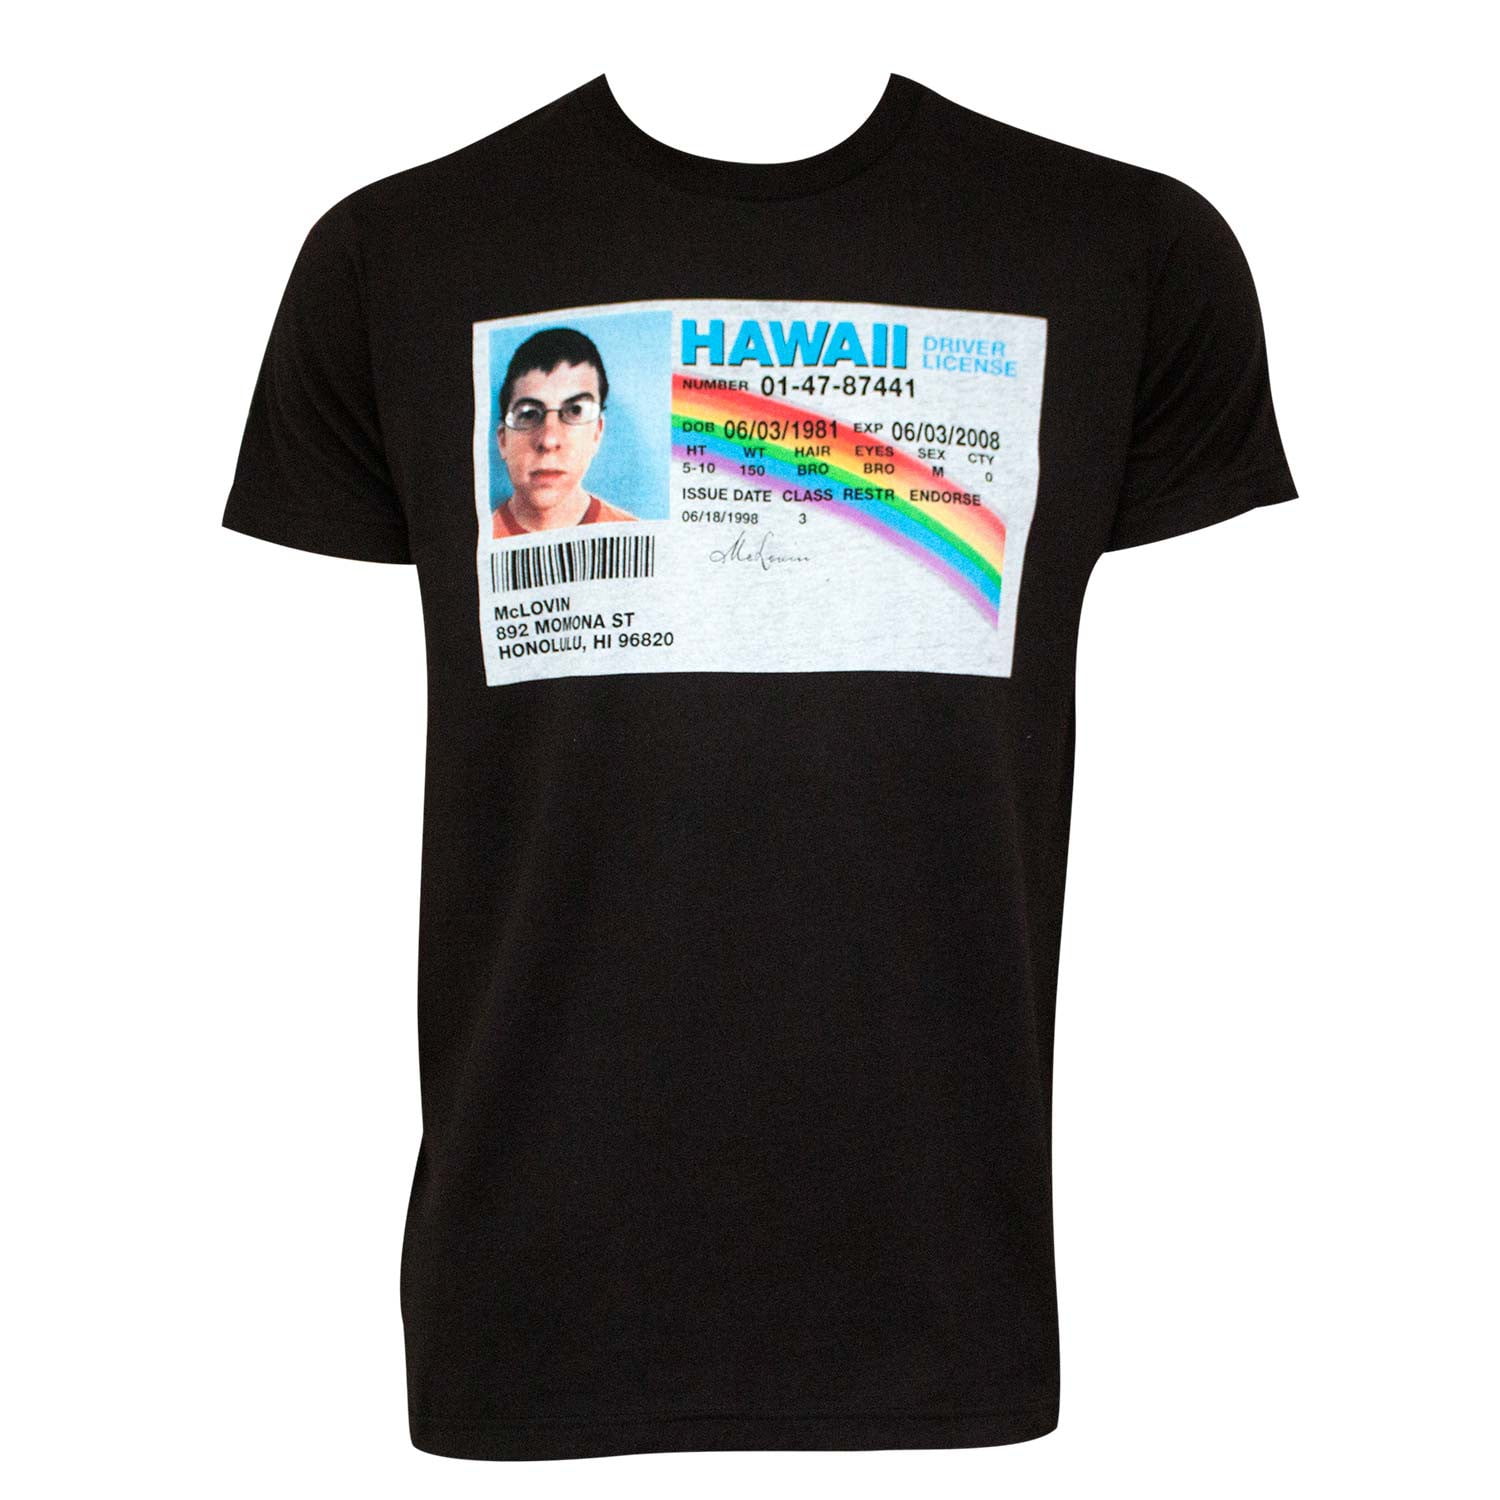 T license. MCLOVIN футболка. Майка Superbad. MCLOVIN ID T Shirt. Футболке с картинкой Hawaii Briver Lucence.